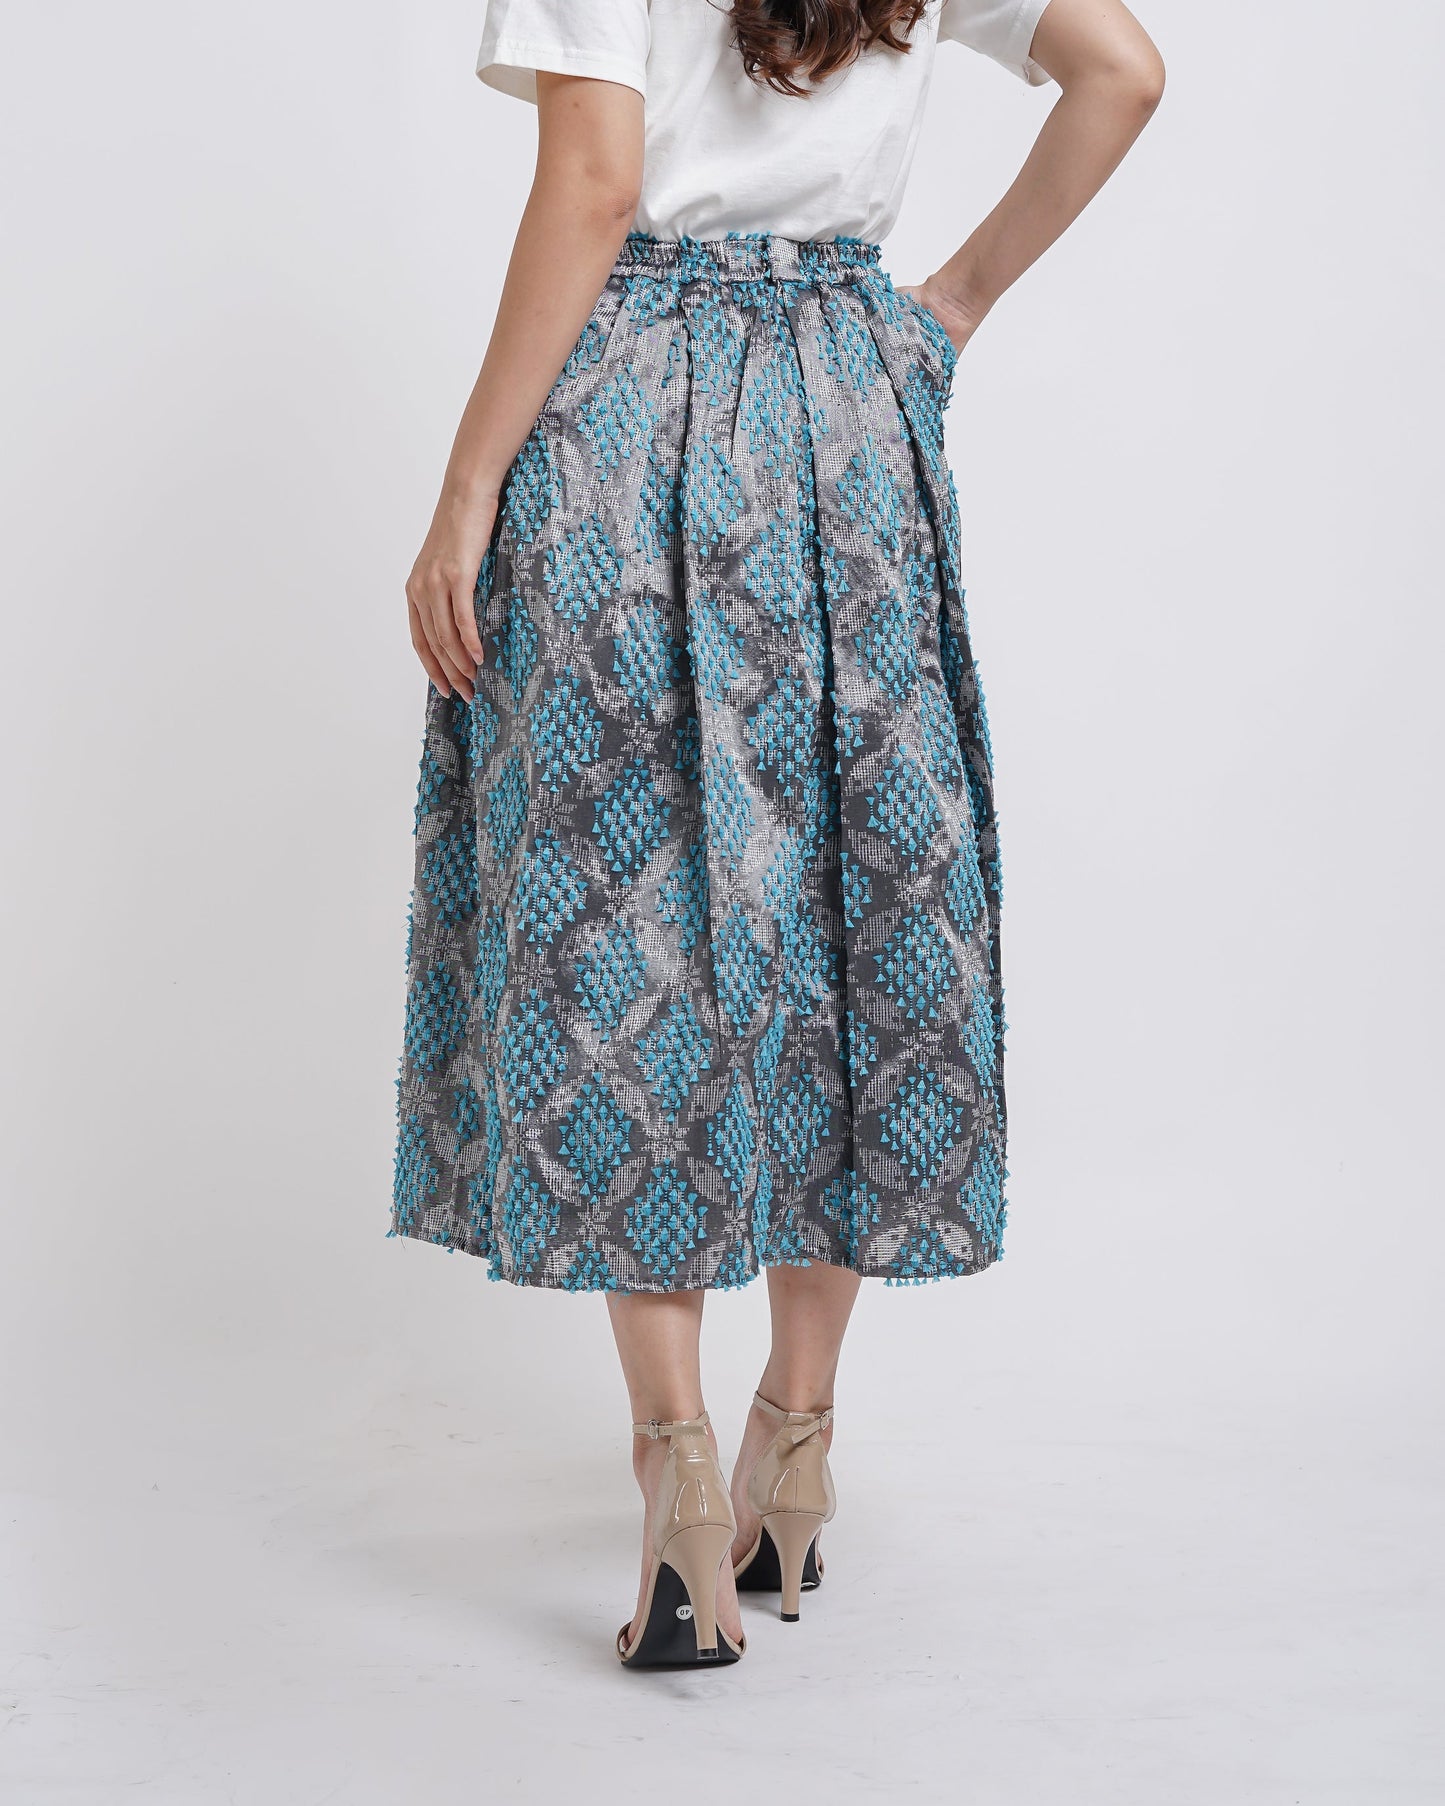 Vivienne A-Line tenun skirt grey blue